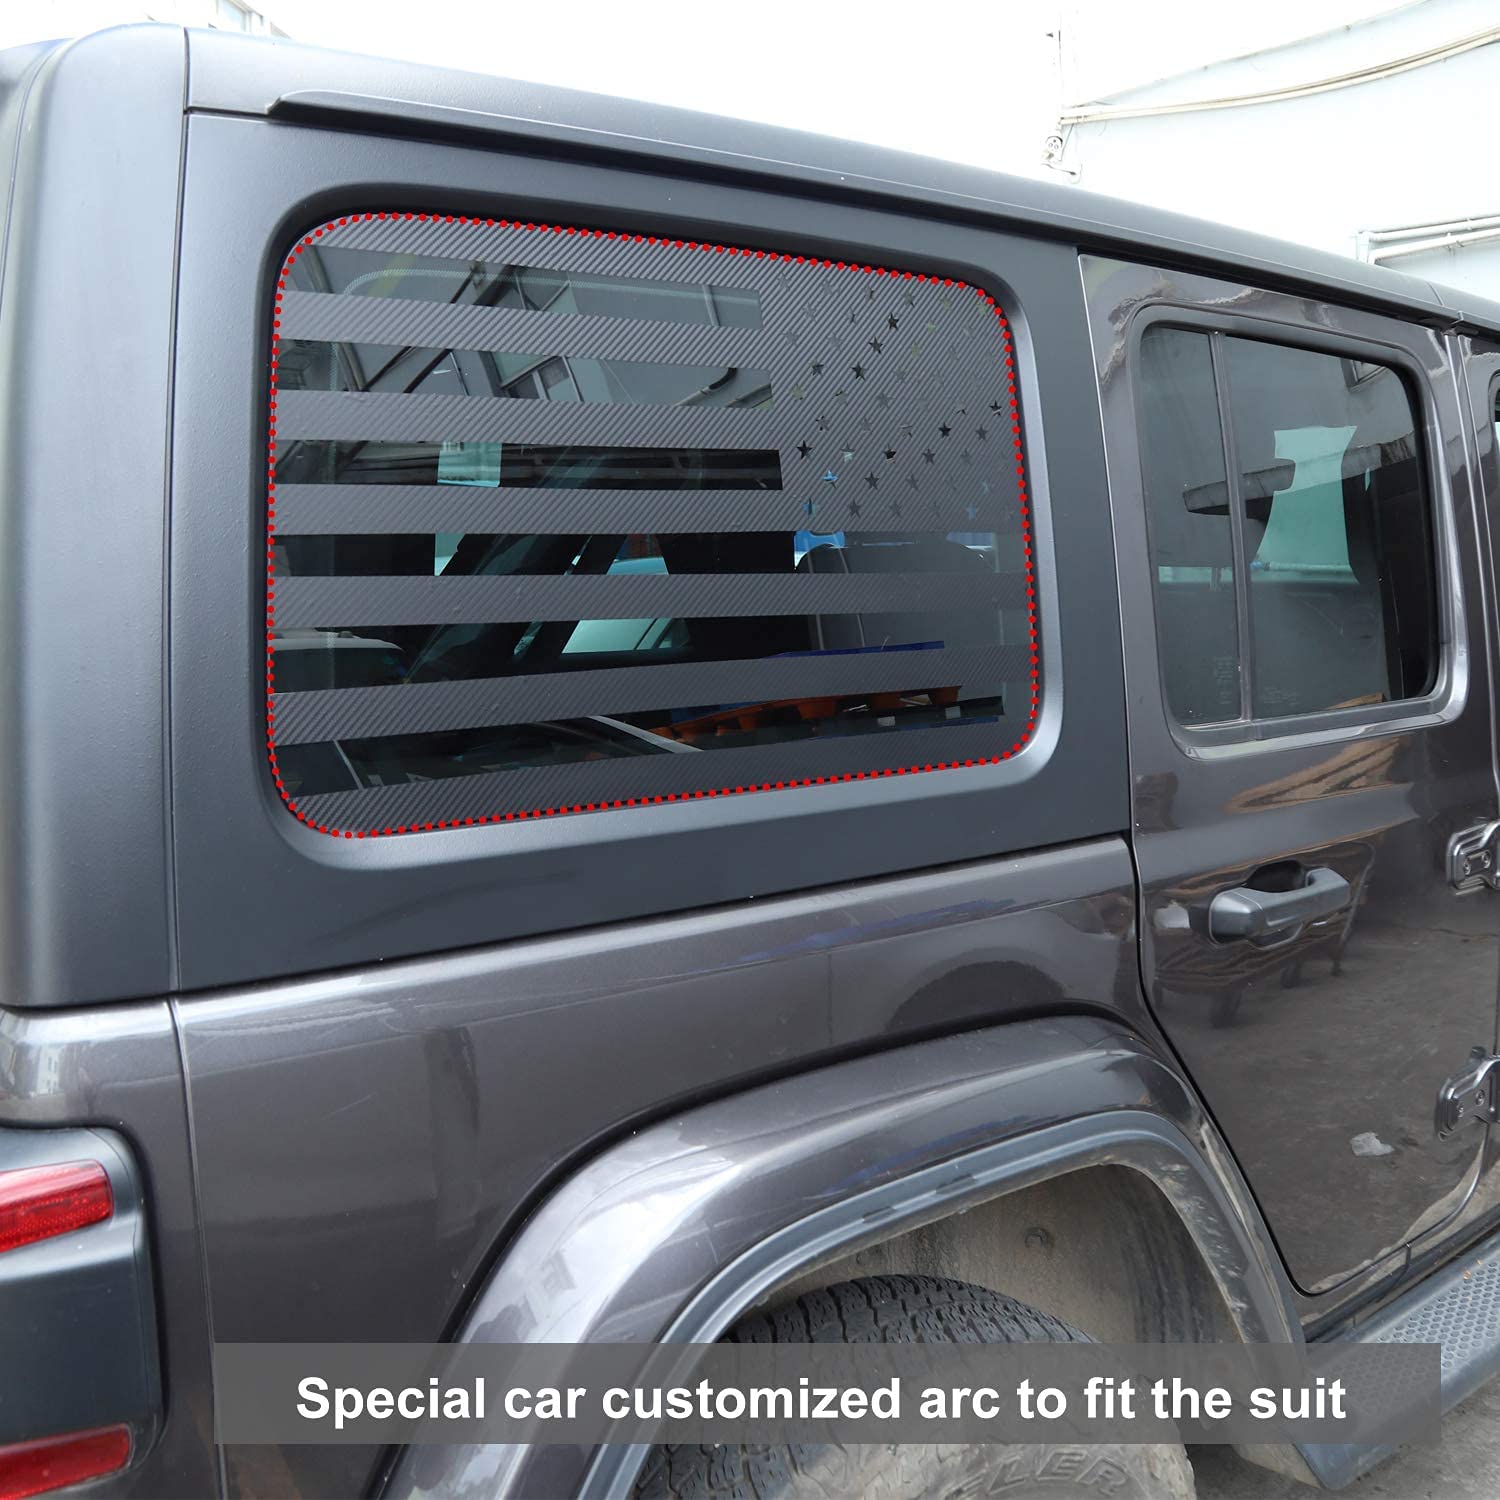 RT-TCZ Rear Window Decal Sticker Trim for Jeep Wrangler 2018+ JLU 4Doors, American Flag